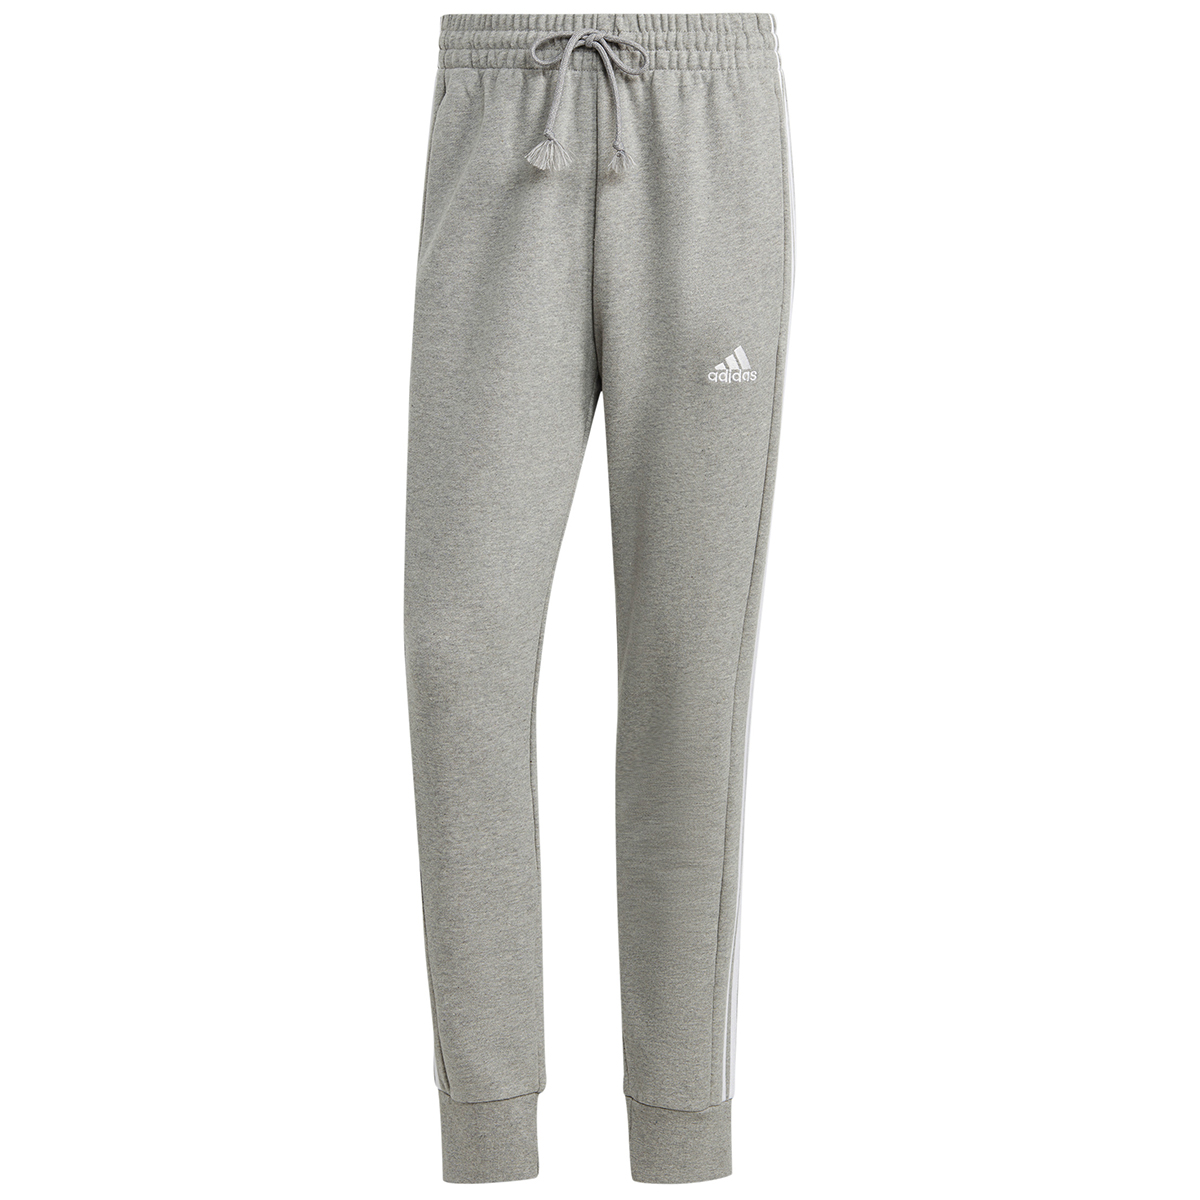 Adidas Men's Essentials Tapered Cuffed 2-Stripes Pants